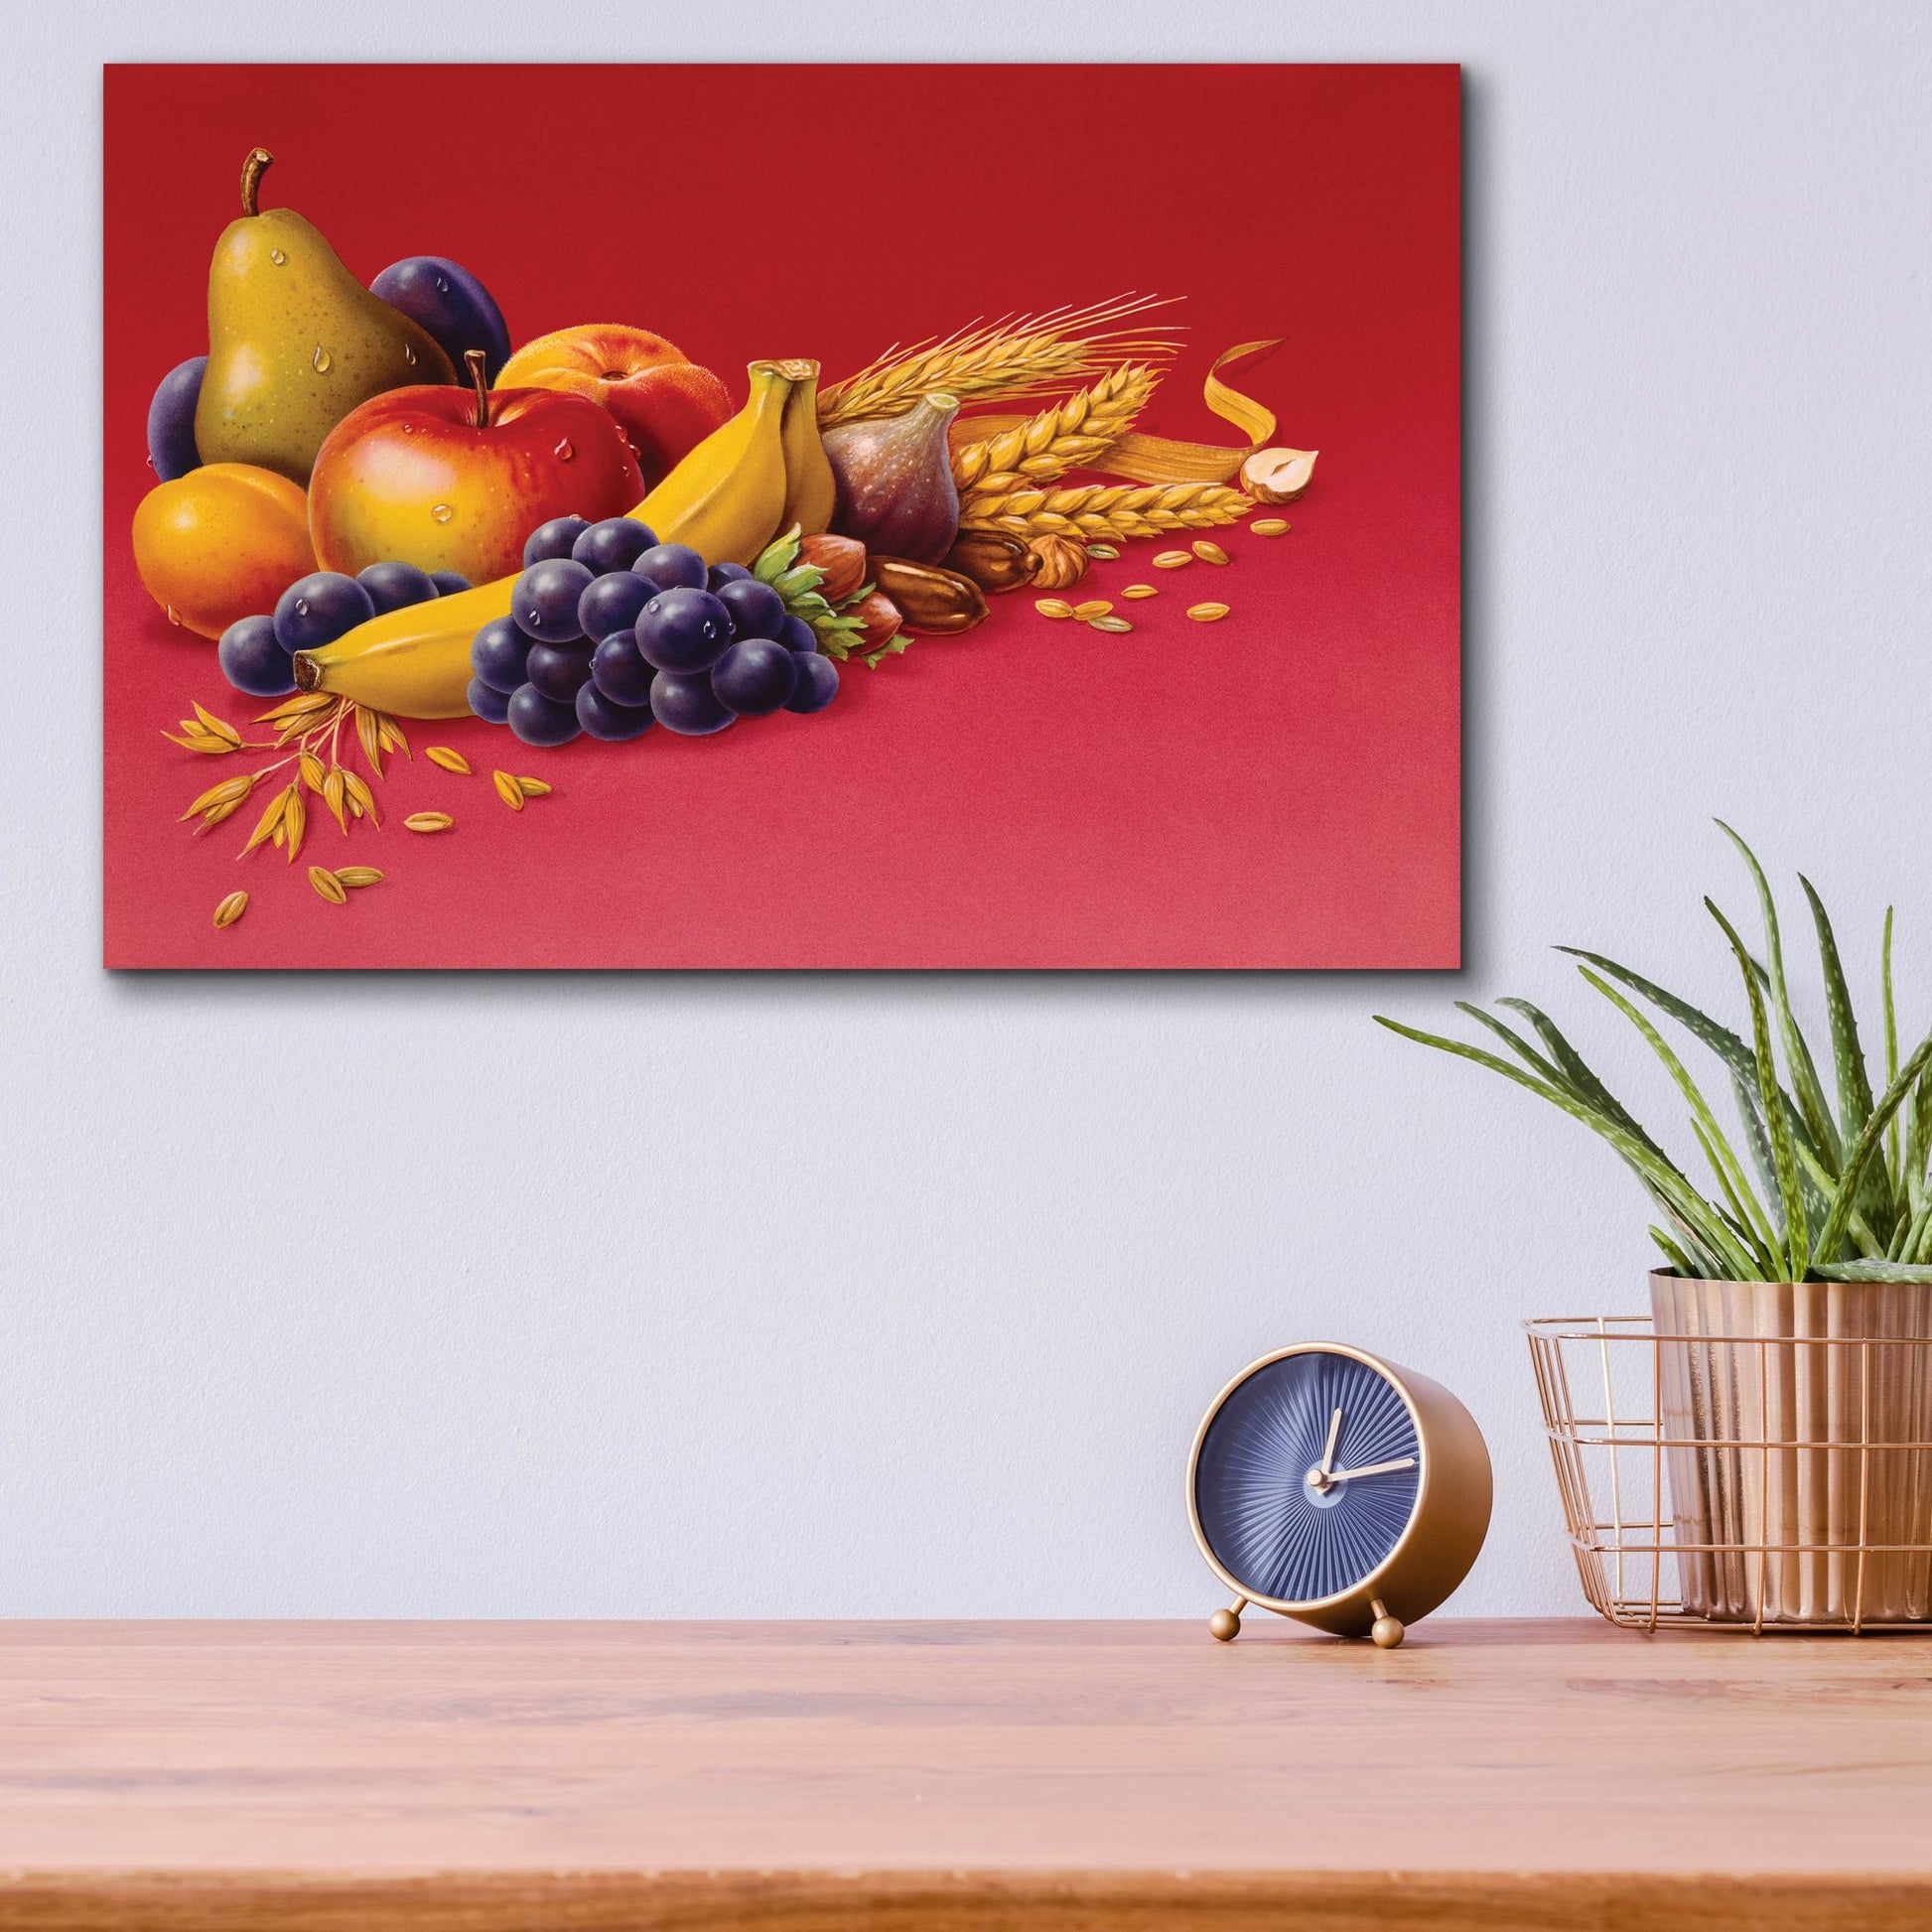 Epic Art 'Fruit        ' by Harro Maass, Acrylic Glass Wall Art,16x12